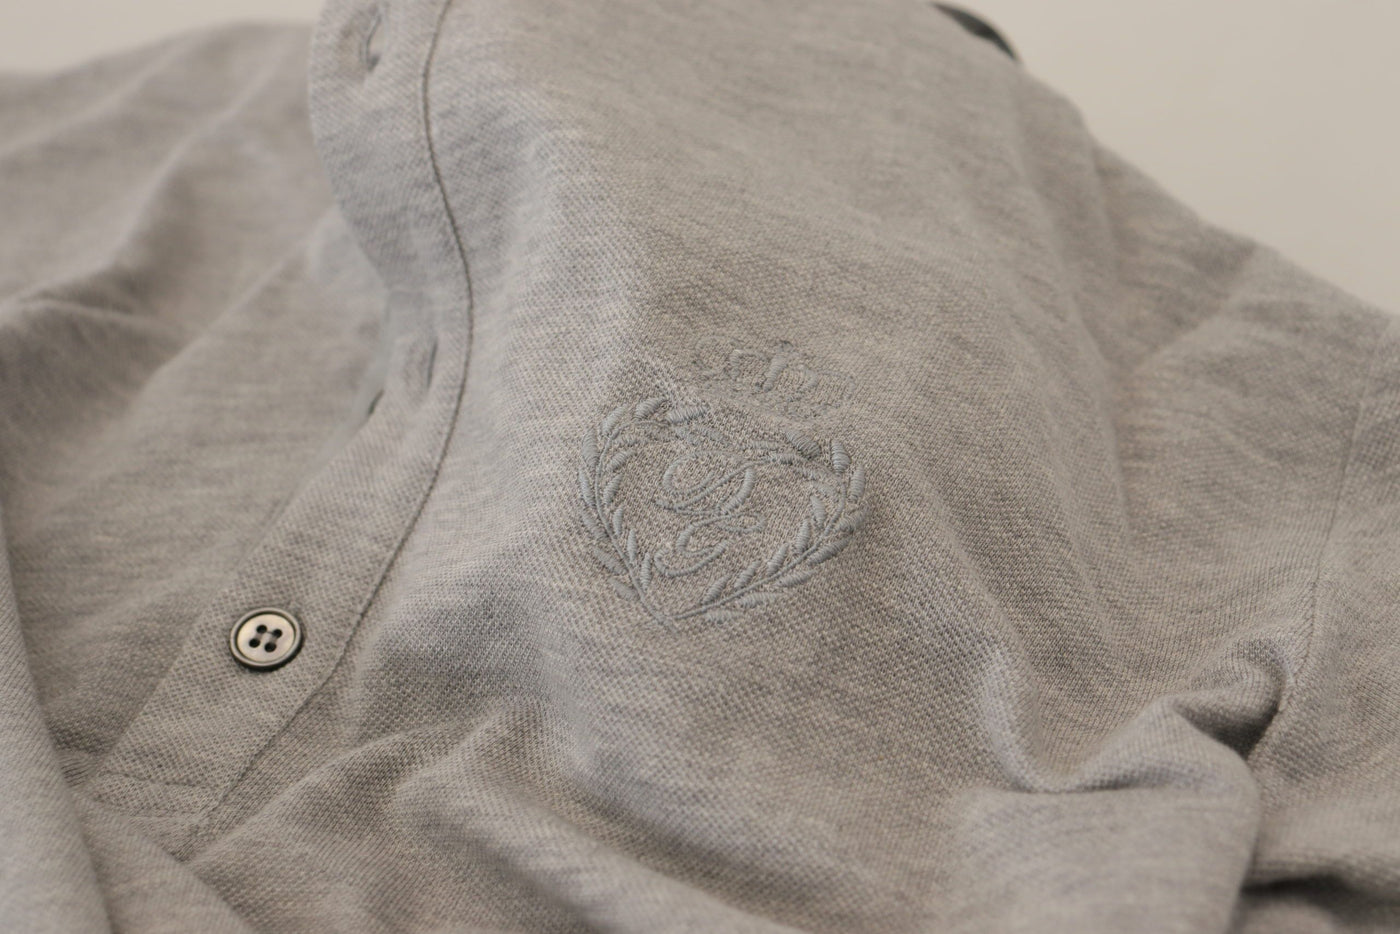 Grey Cotton Embroidered Logo Polo T-shirt